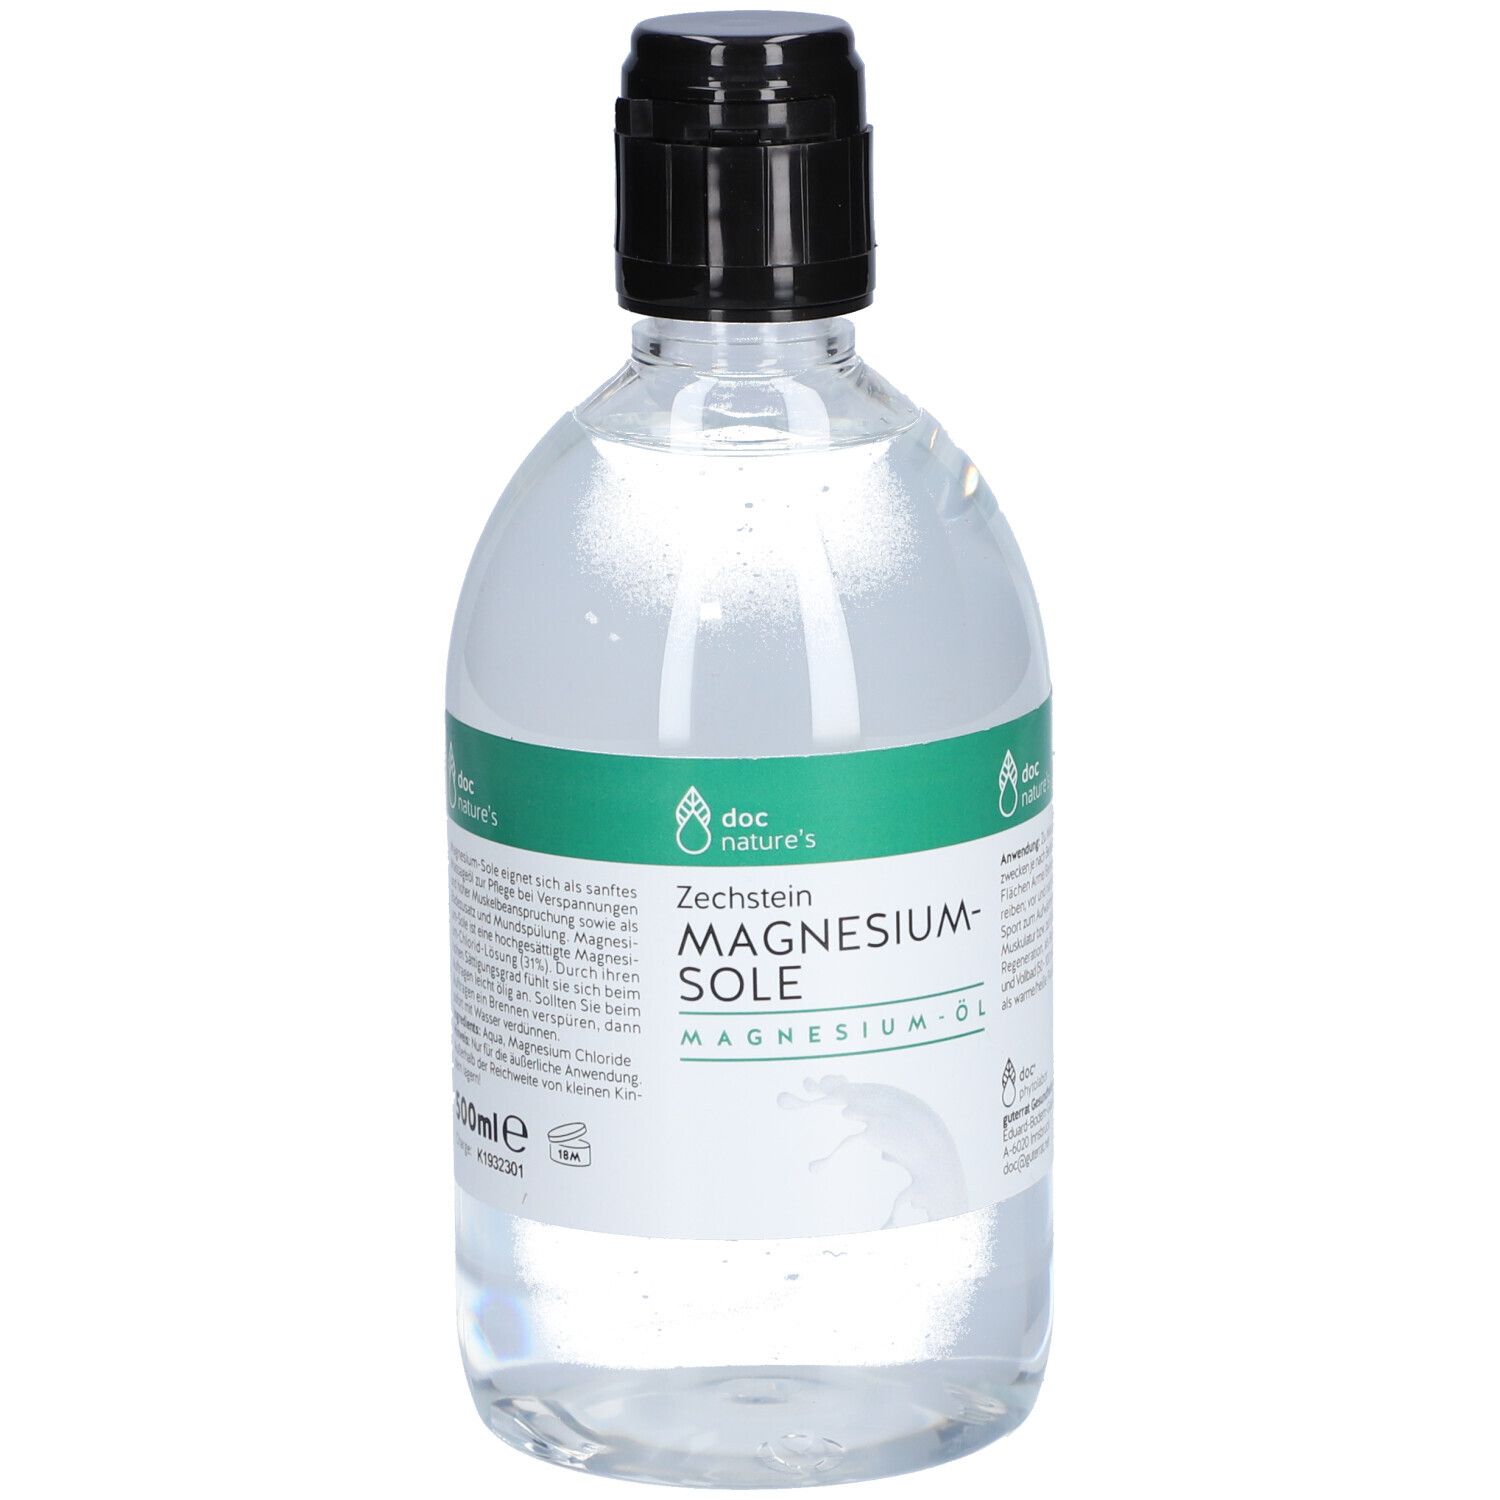 doc nature's Zechstein Magnesium-Sole Magnesiumöl